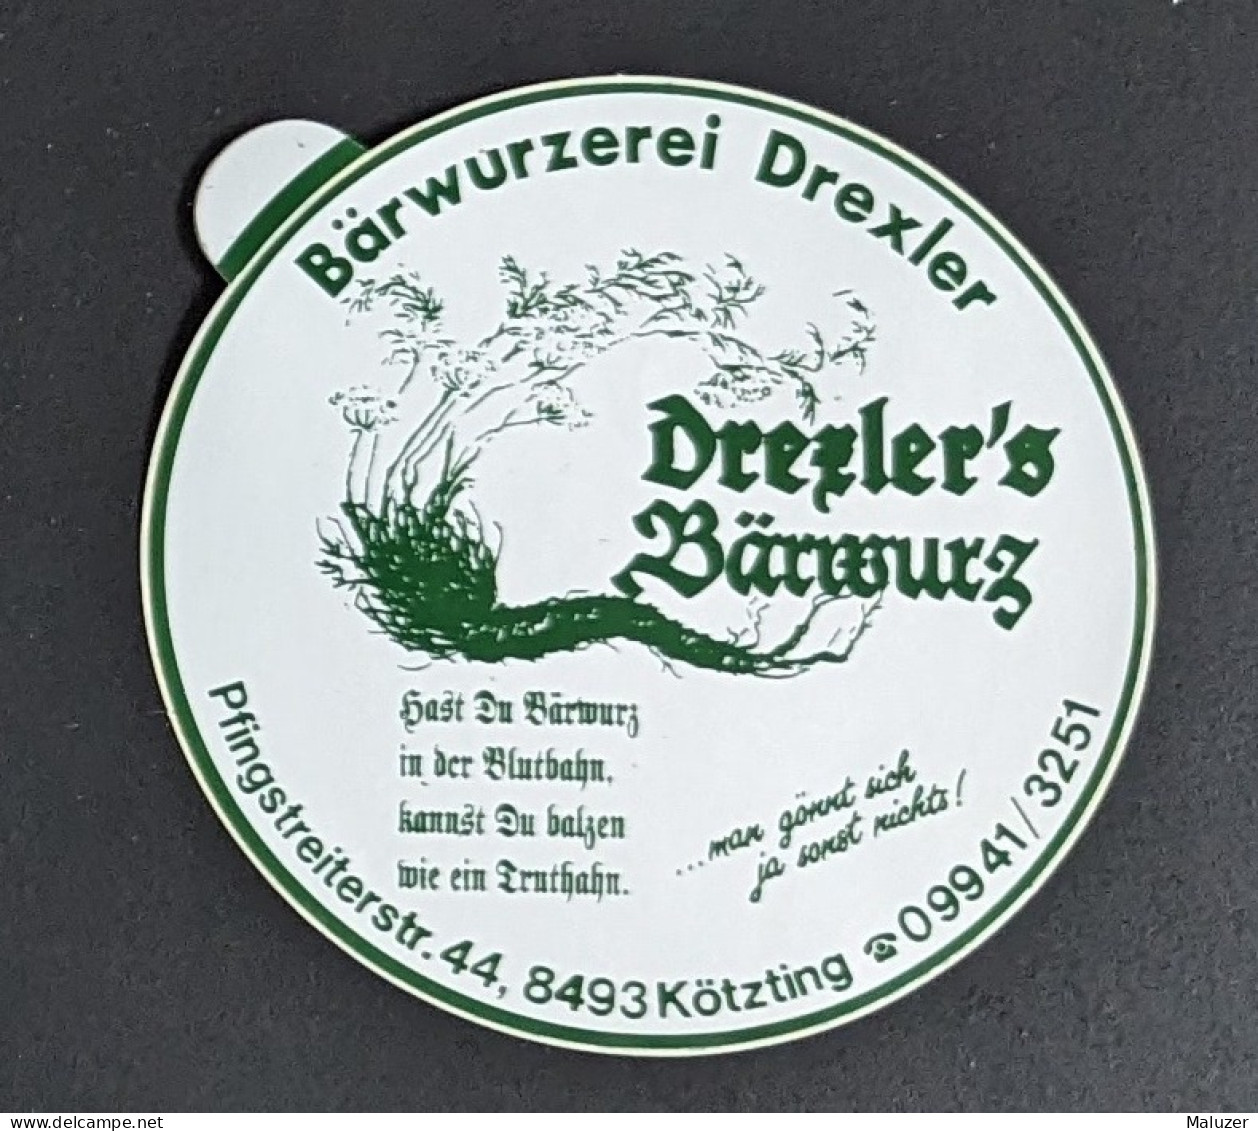 AUTOCOLLANT BARWURZEREI DEXLER - BARWURZ - KÖTZTING - ALLEMAGNE DEUTSCHLAND GERMANY - BAR CAFÉ - Adesivi